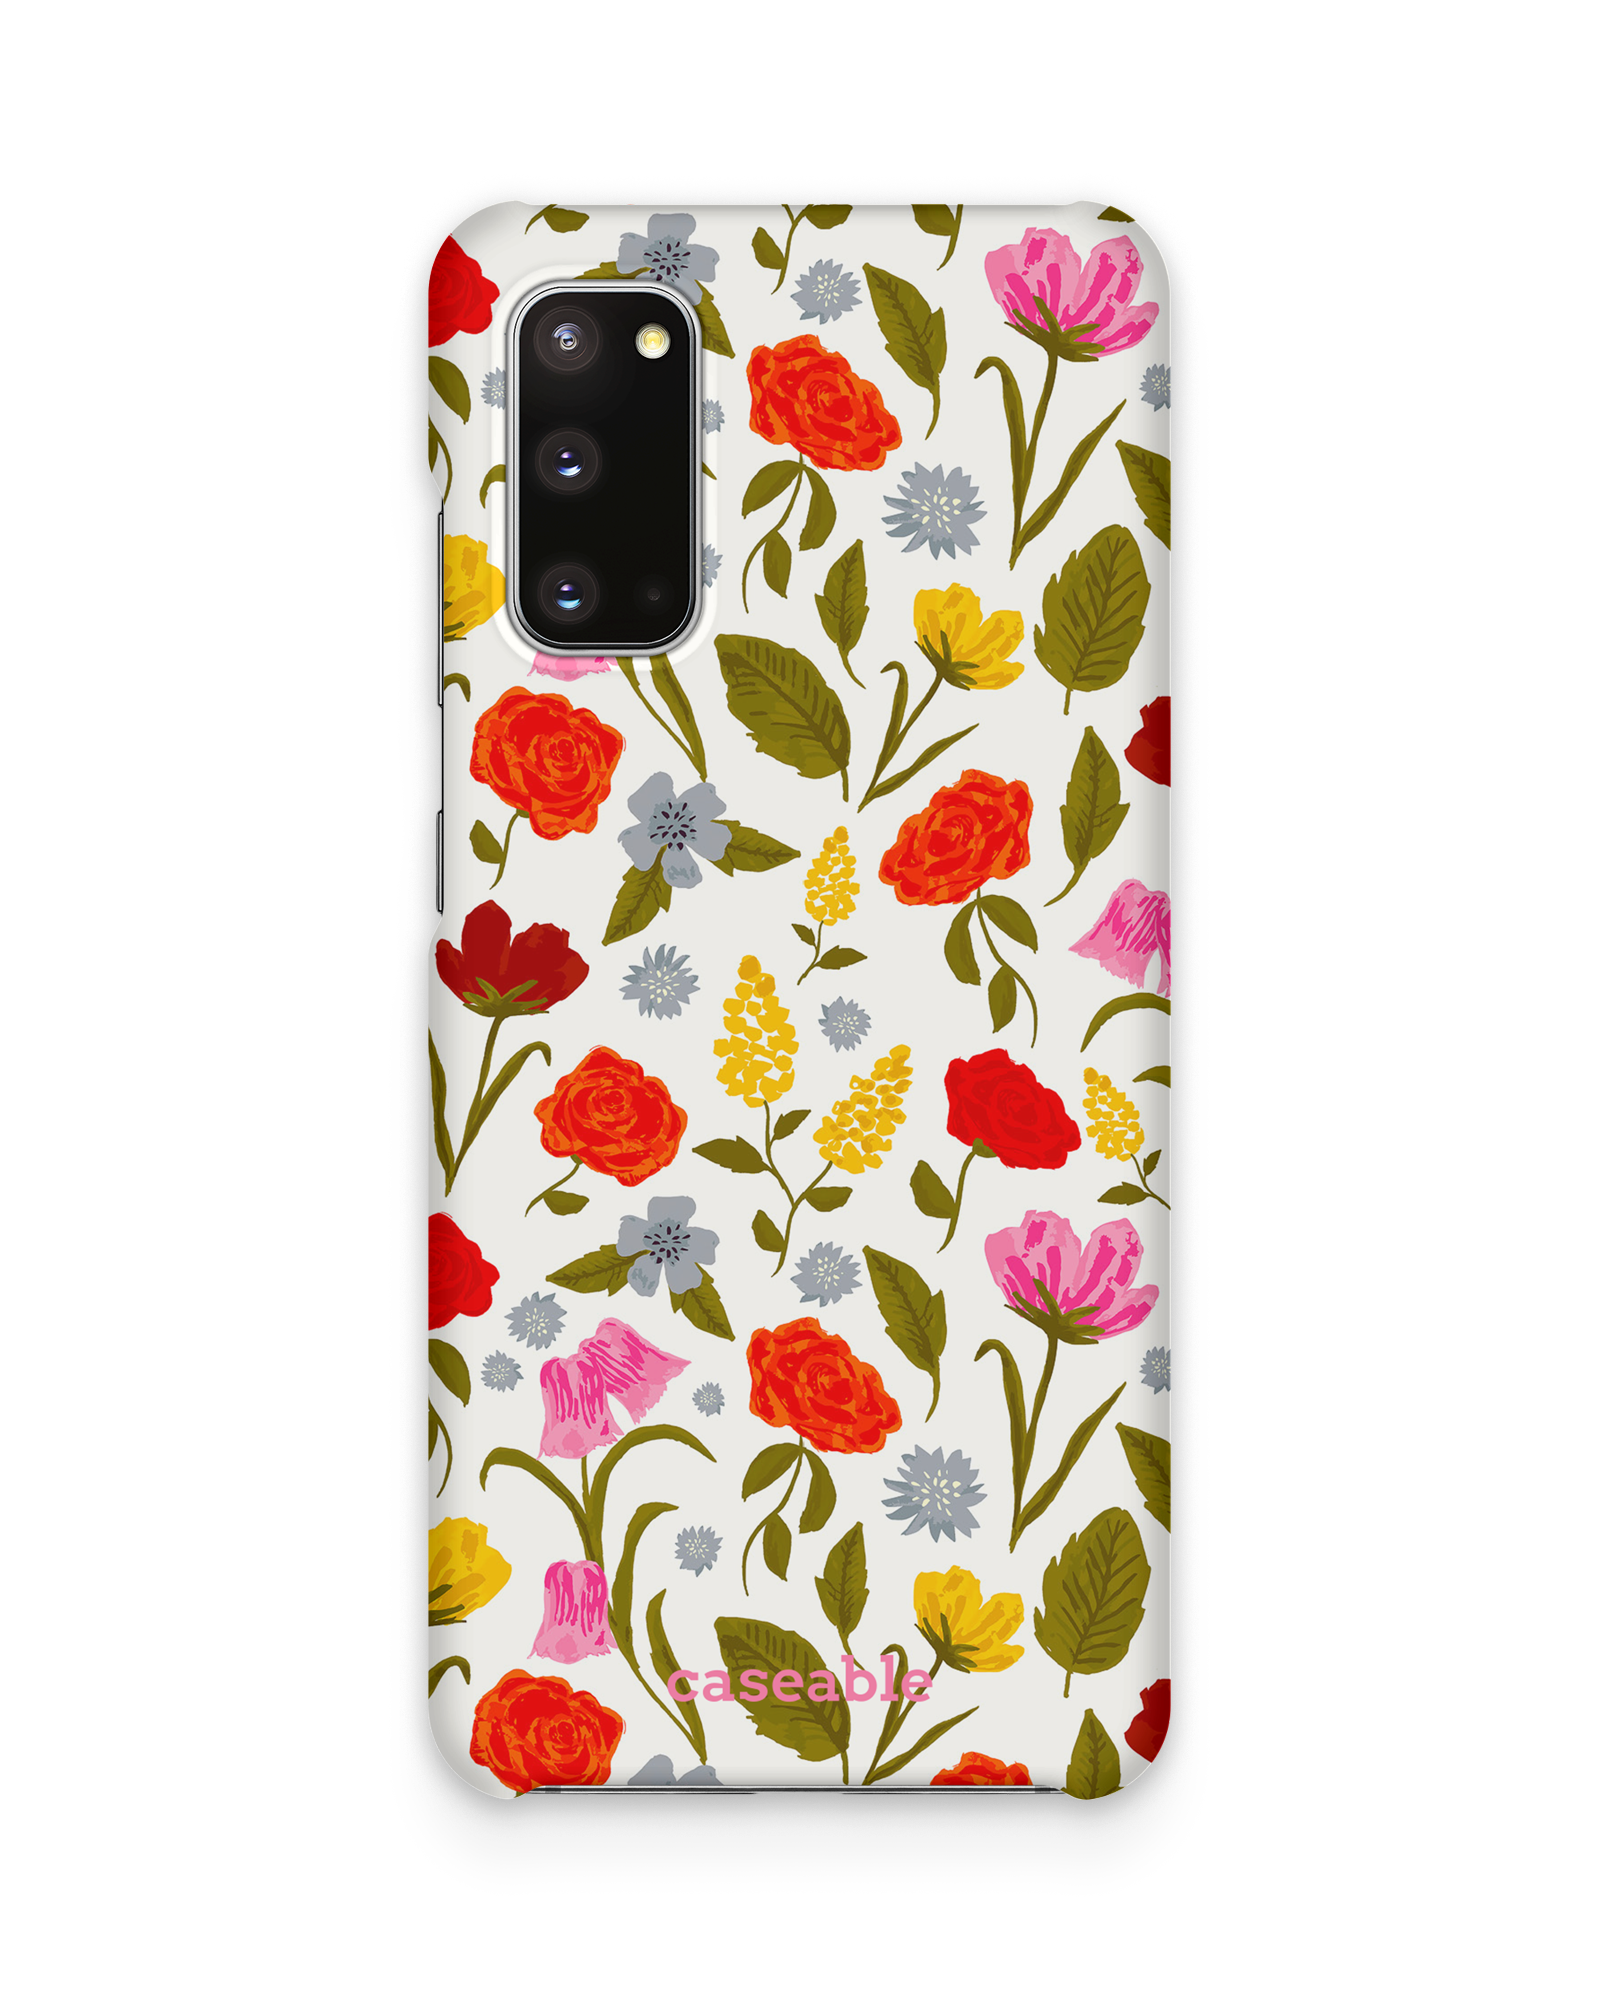 Botanical Beauties Hard Shell Phone Case Samsung Galaxy S20